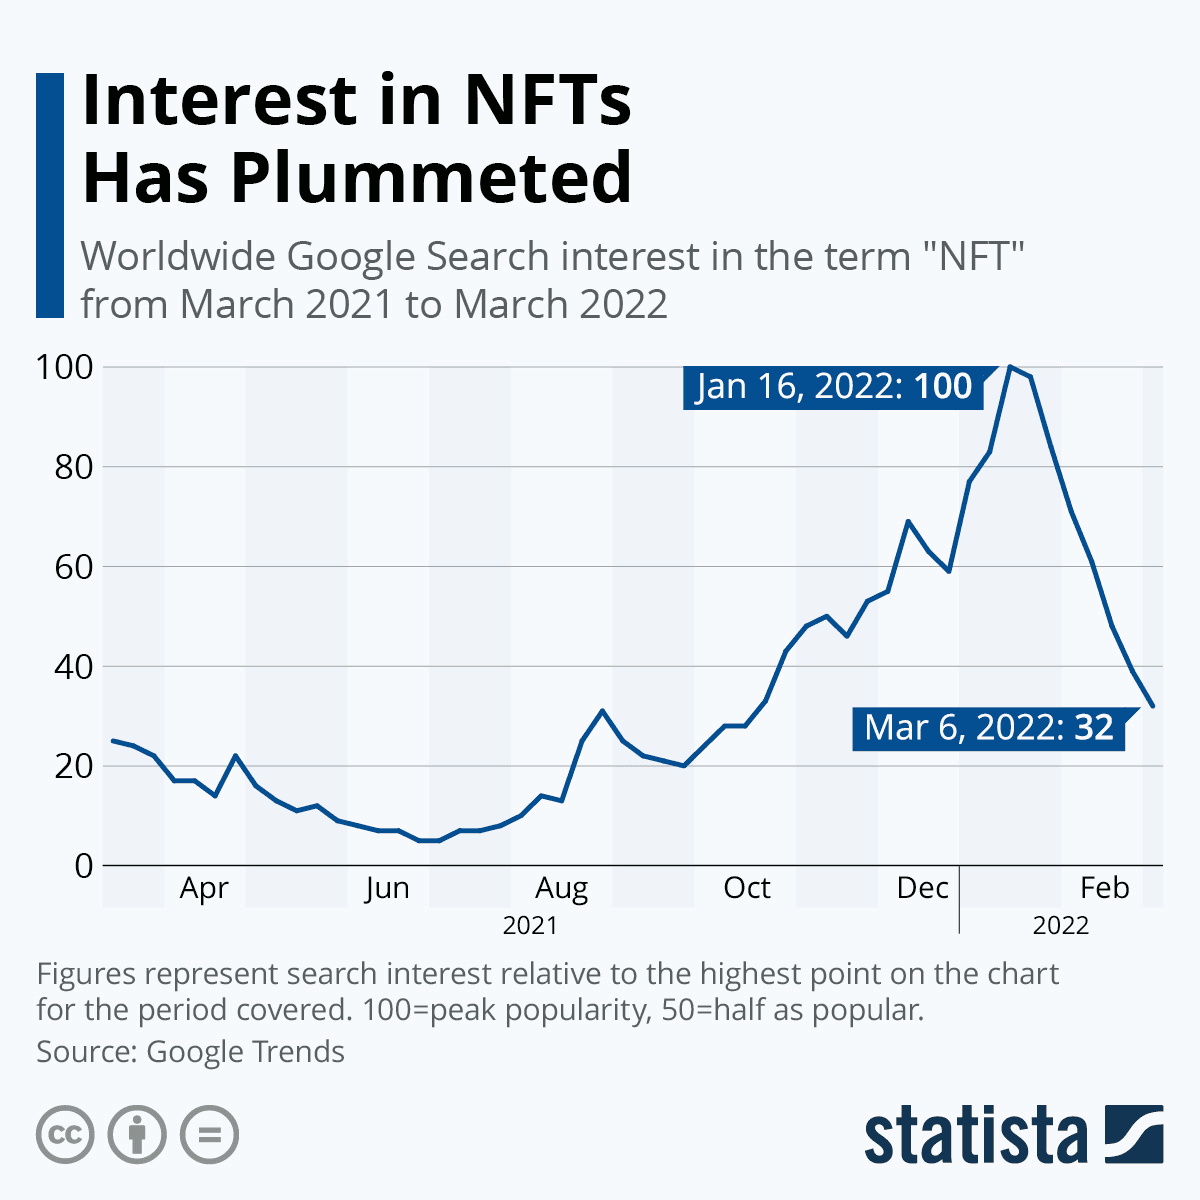 Interest in NFTs has plummeted line graph